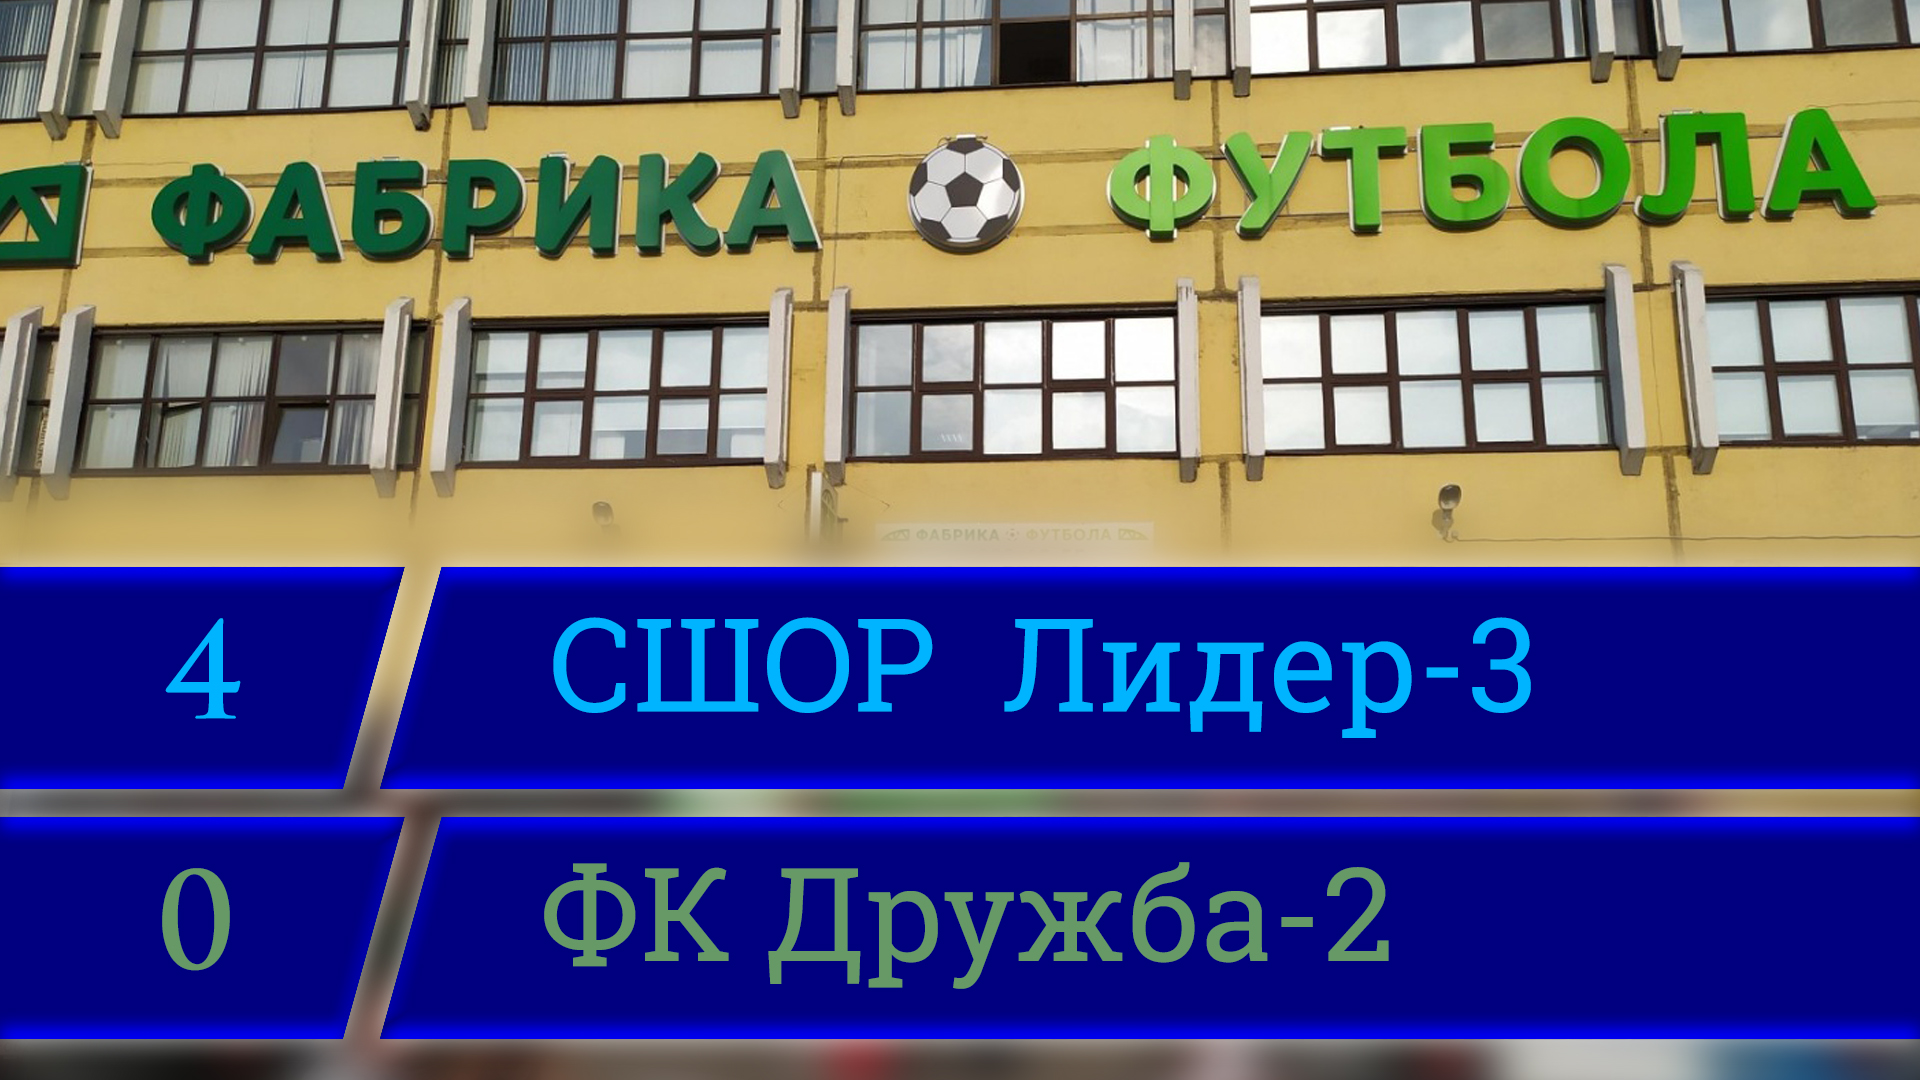 СШОР Лидер-3 - ФК Дружба-2 (4:0), Турнир Sport Is Life, Фабрика Футбола, 07.03.2022